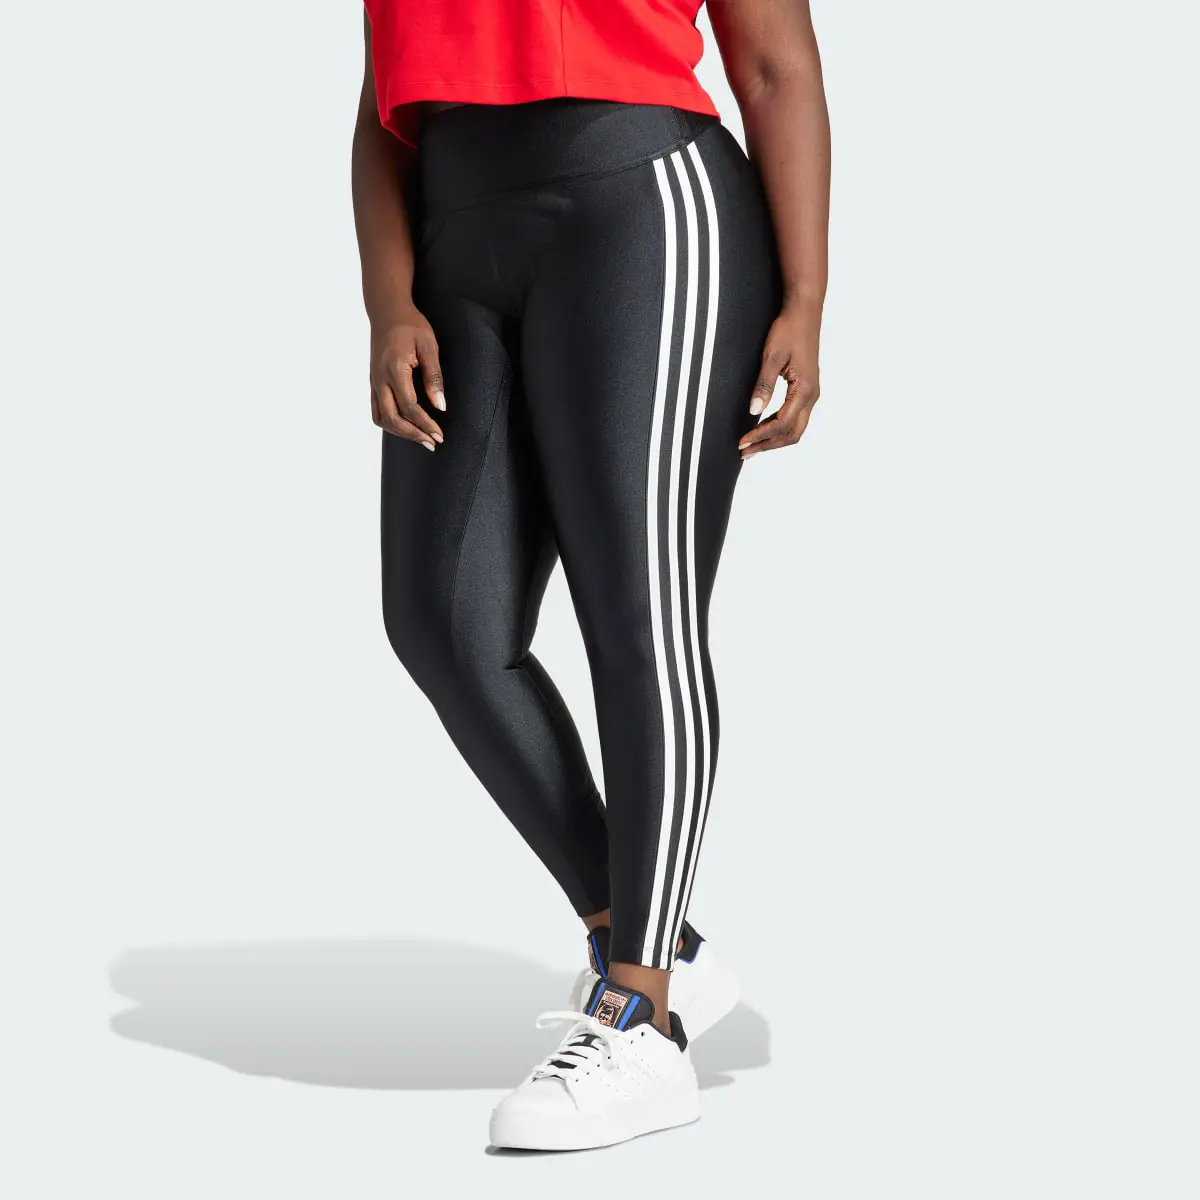 Adidas 3 Stripe Leggings Plus Size